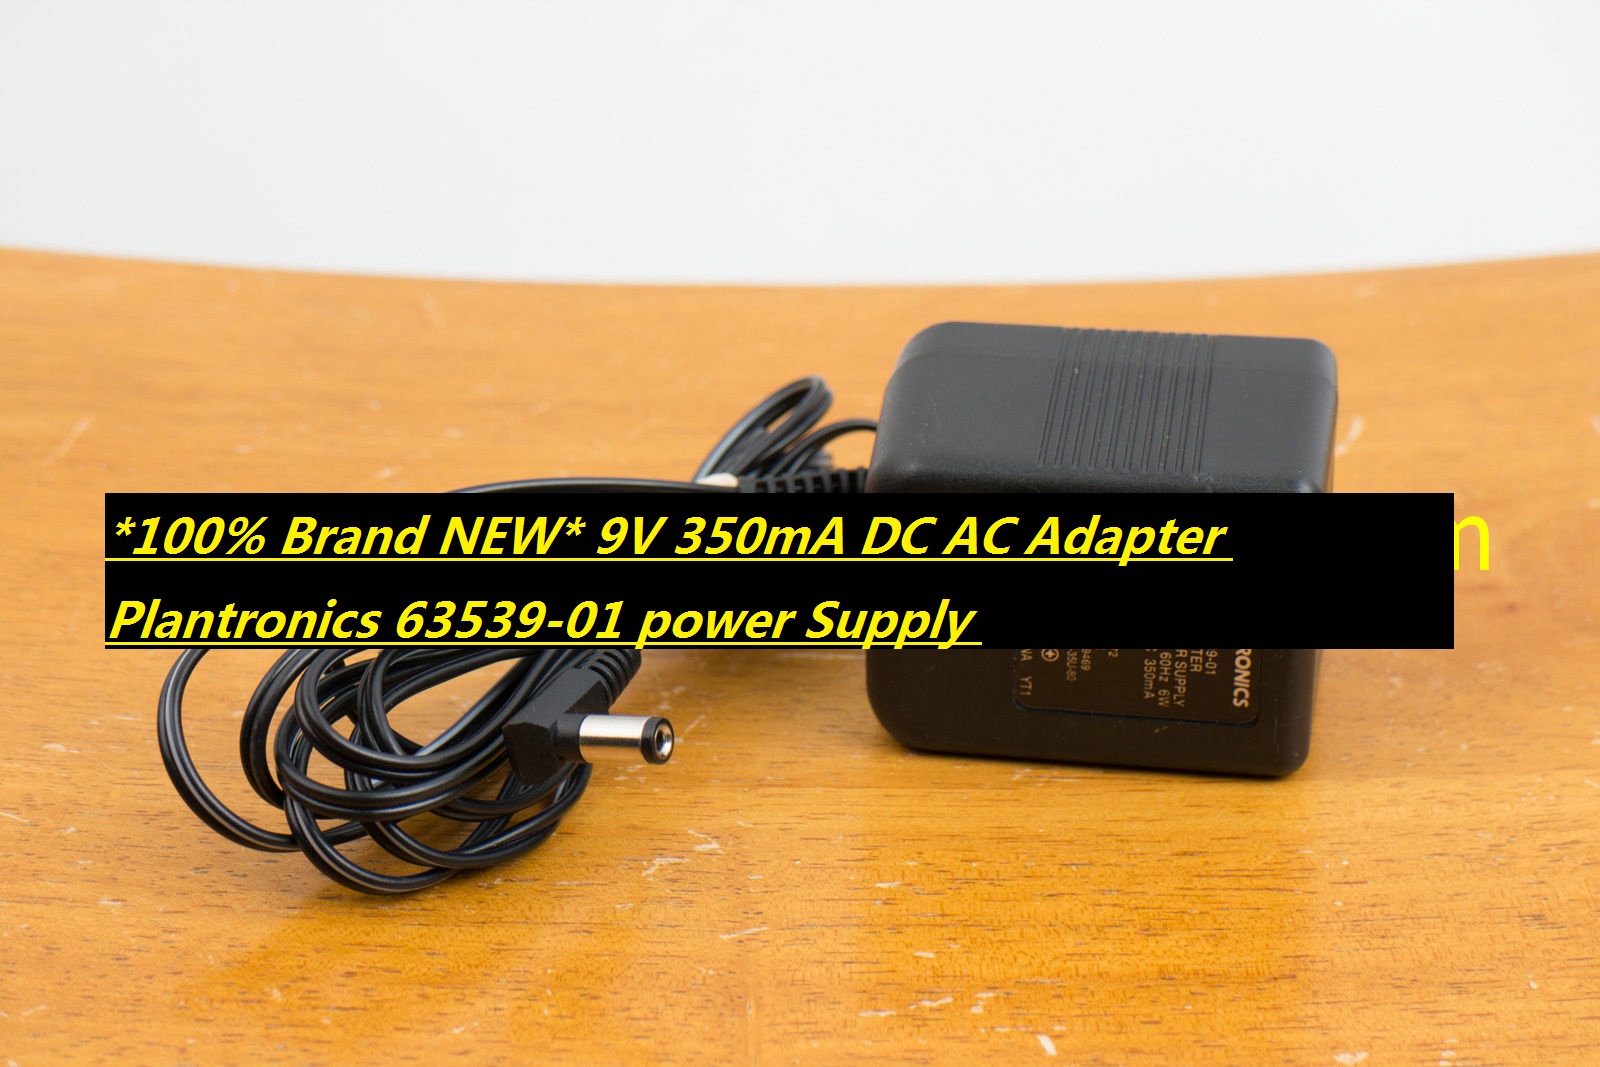 *100% Brand NEW* 9V 350mA DC AC Adapter Plantronics 63539-01 power Supply